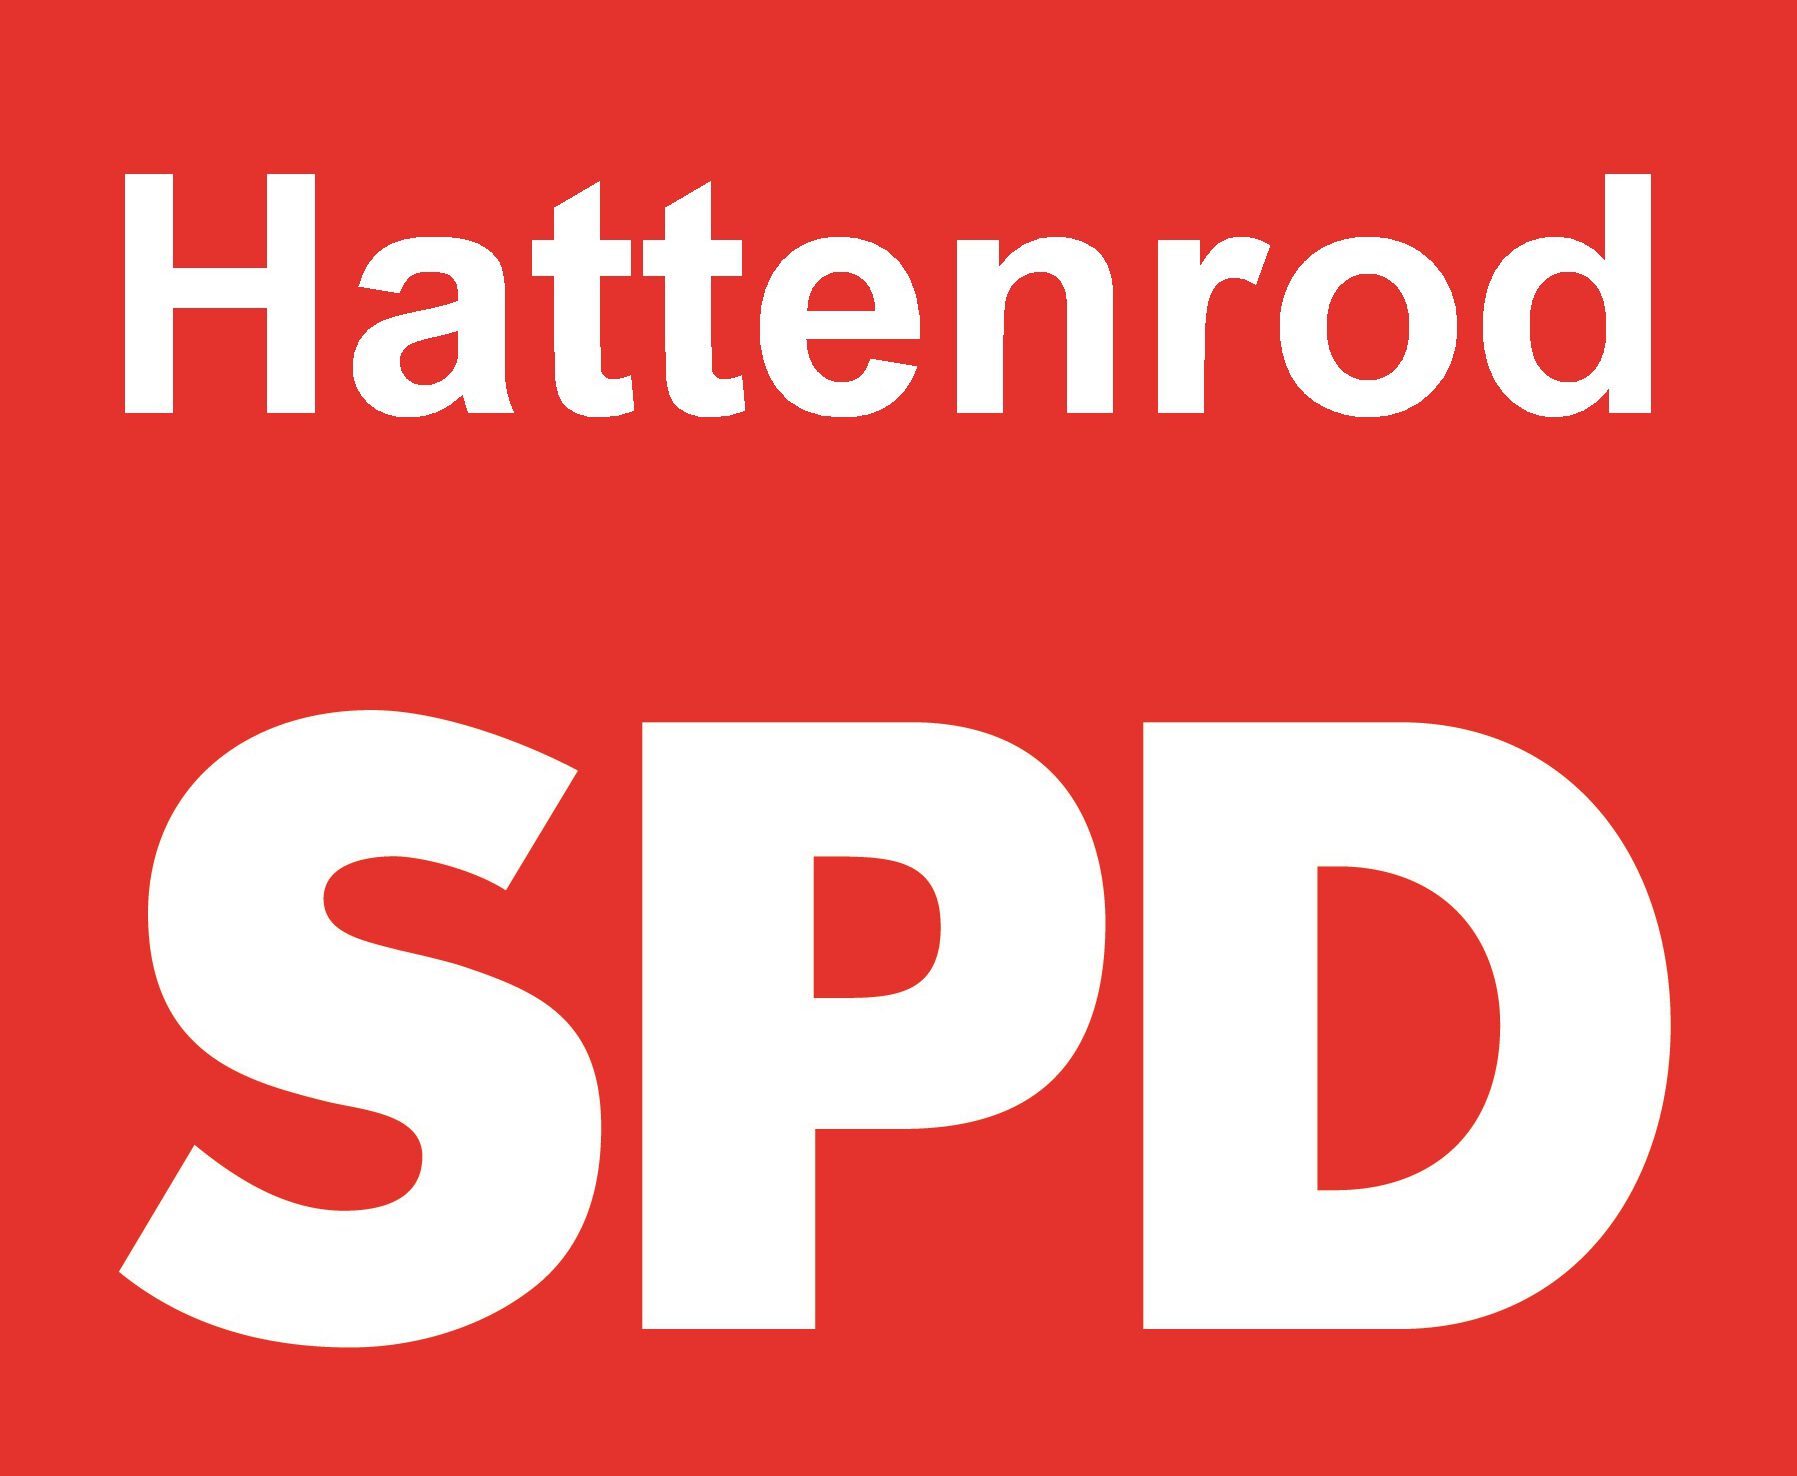 SPD Hattenrod